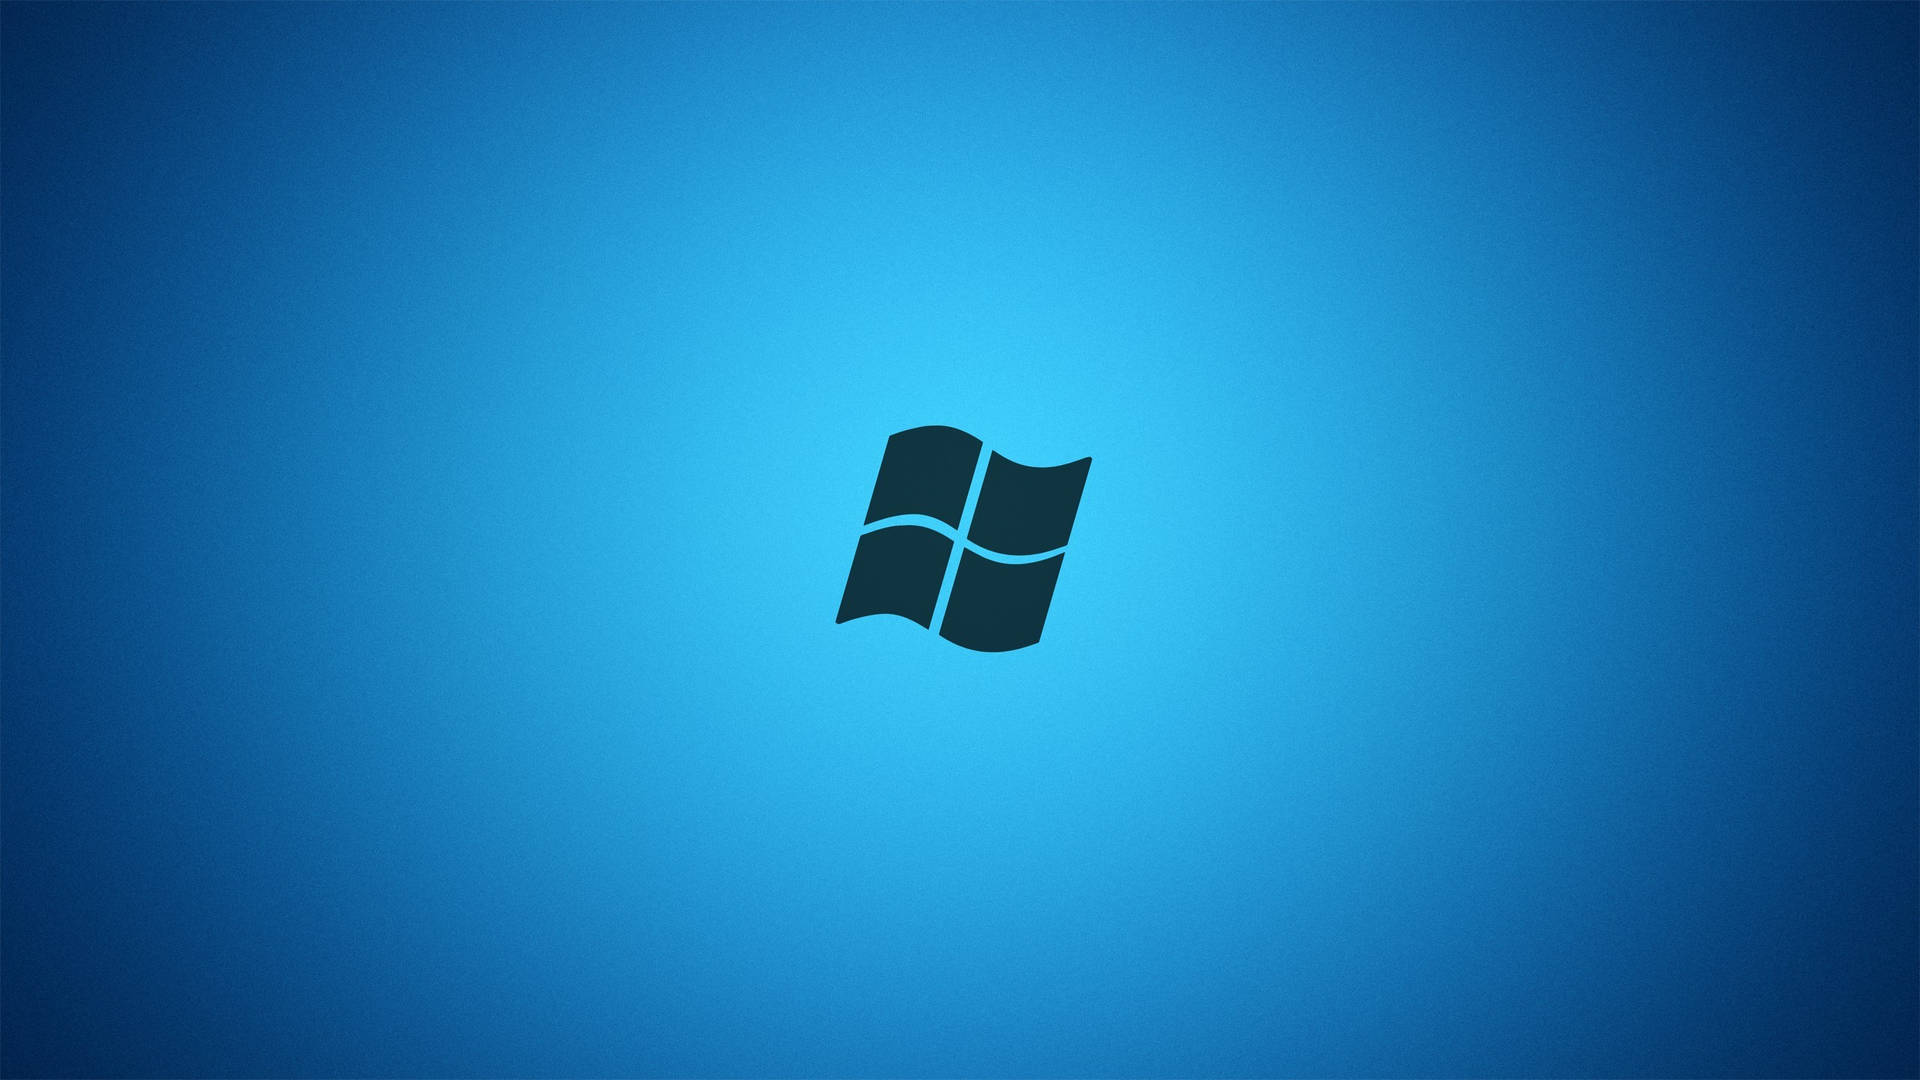 Minimalistic Blue And Black Windows 7 Screen